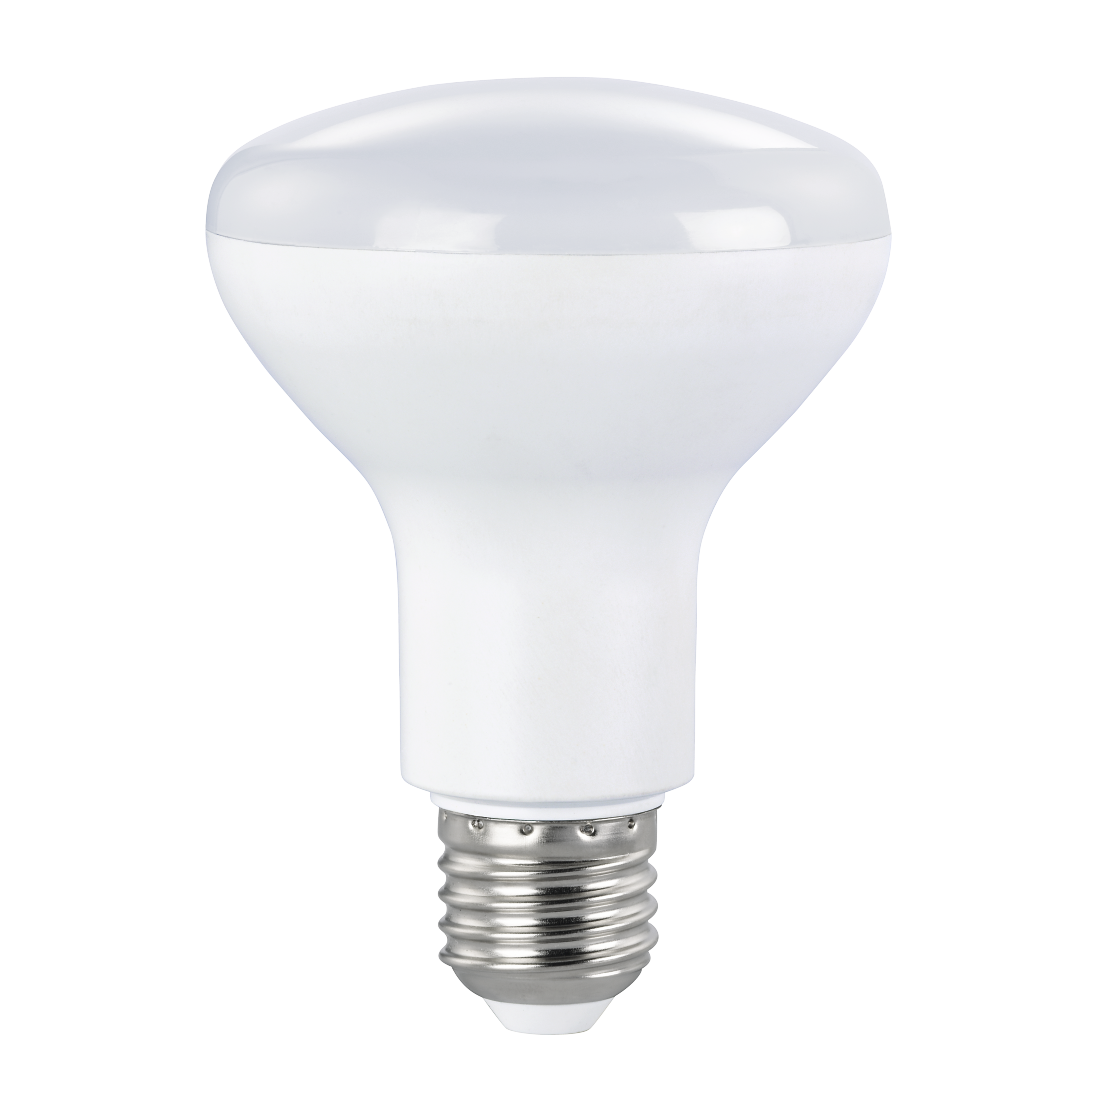 abx High-Res Image - Xavax, LED Bulb, E27, 1050 lm Replaces 75 W, Reflector Bulb R80, warm white